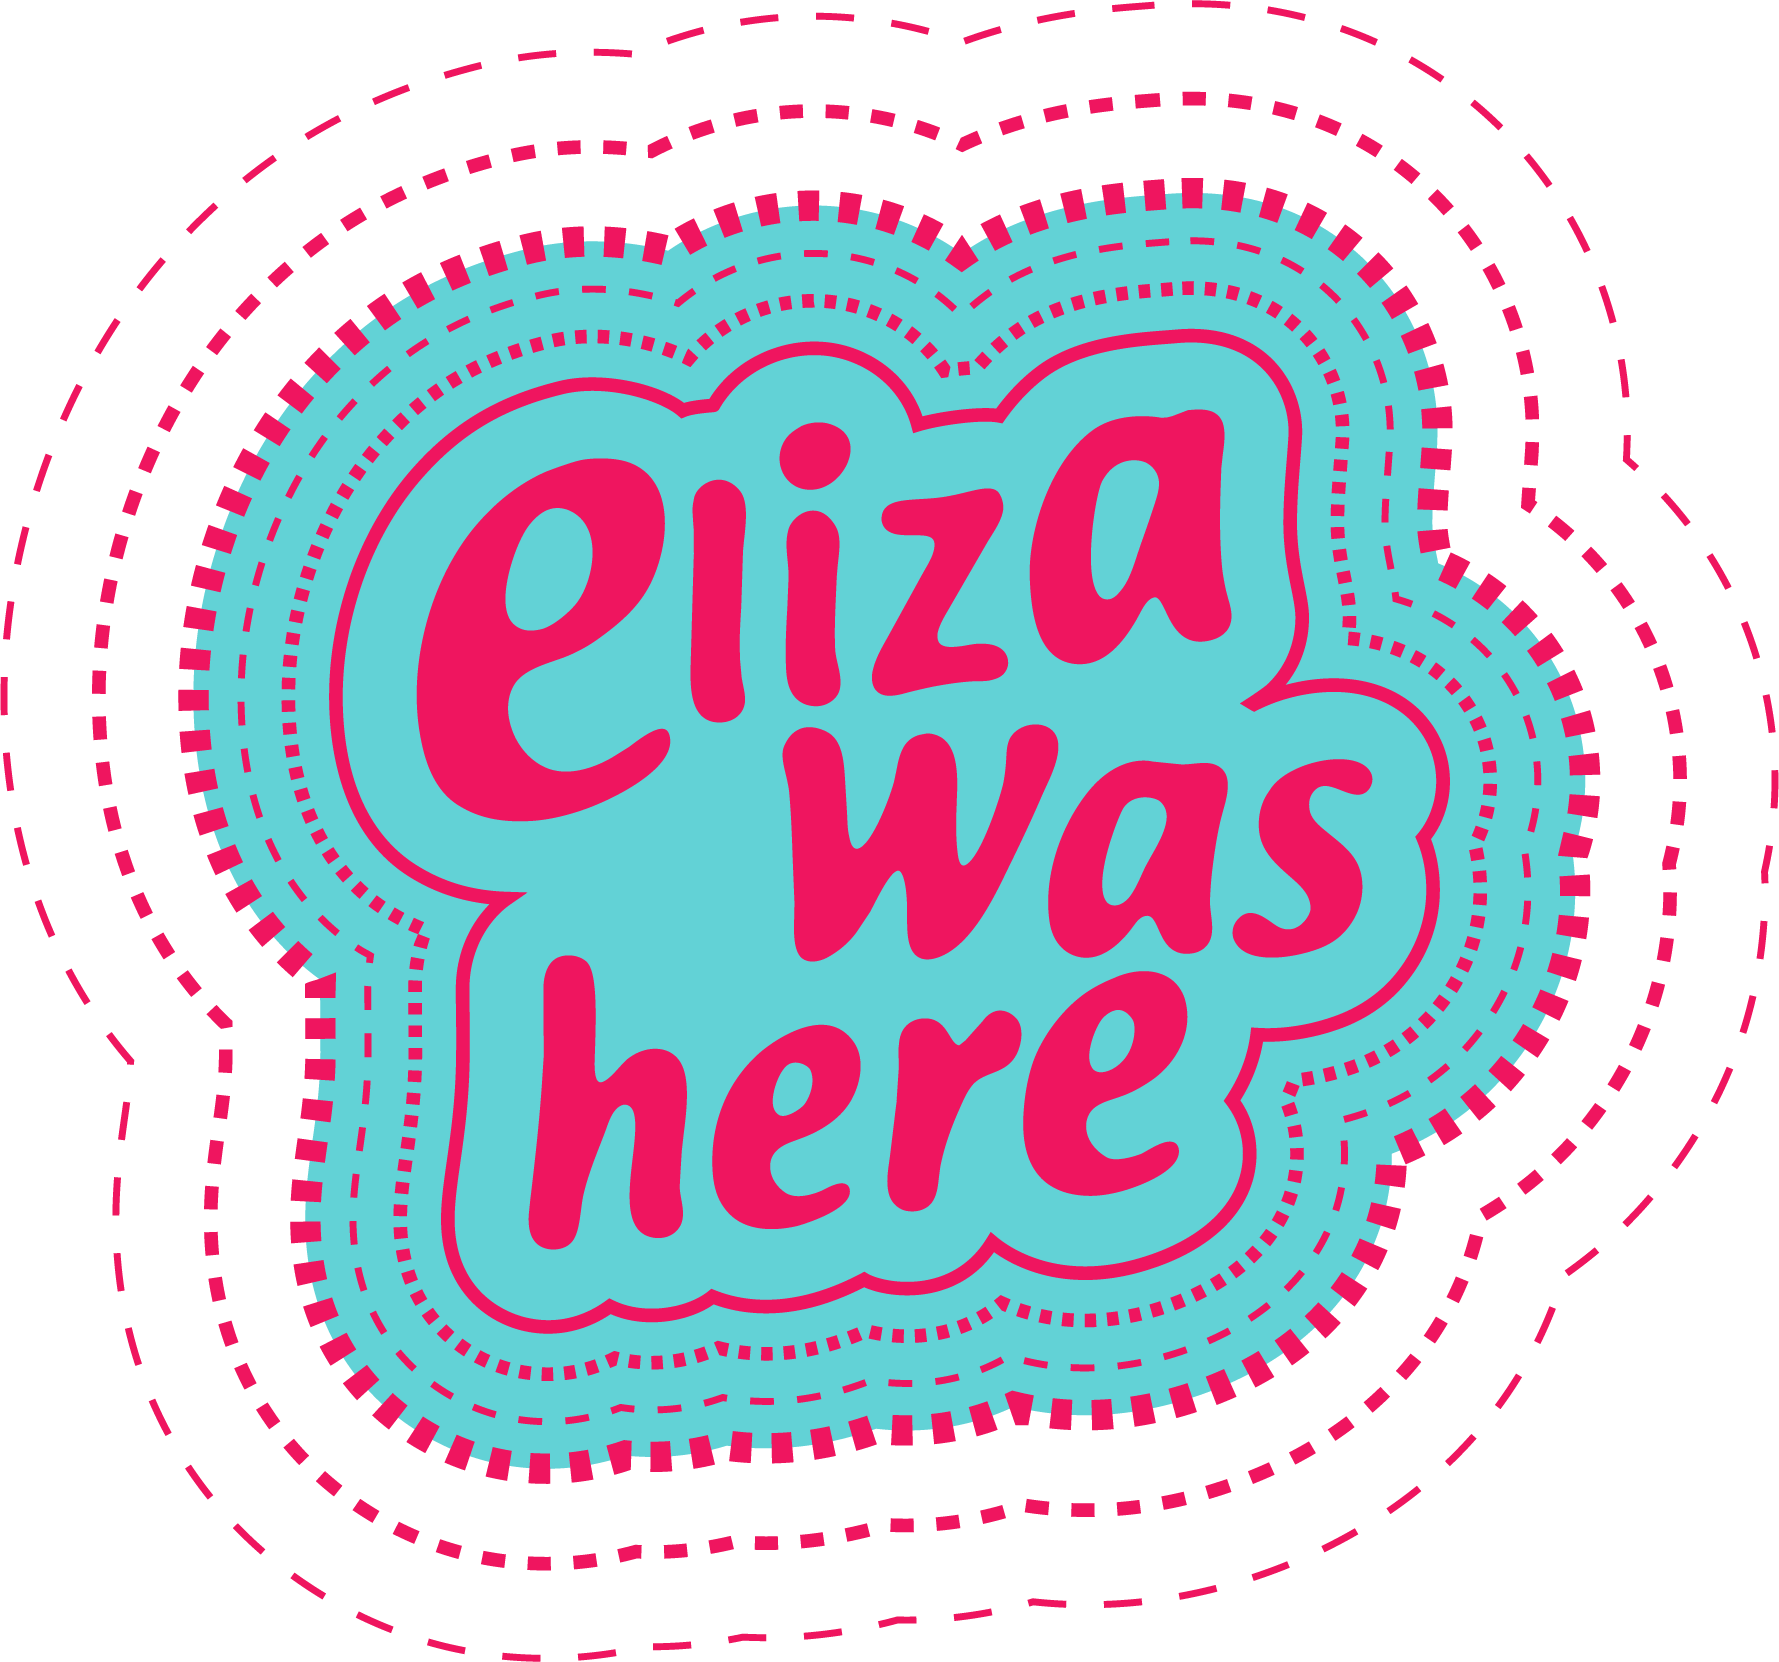 h. Eliza was here